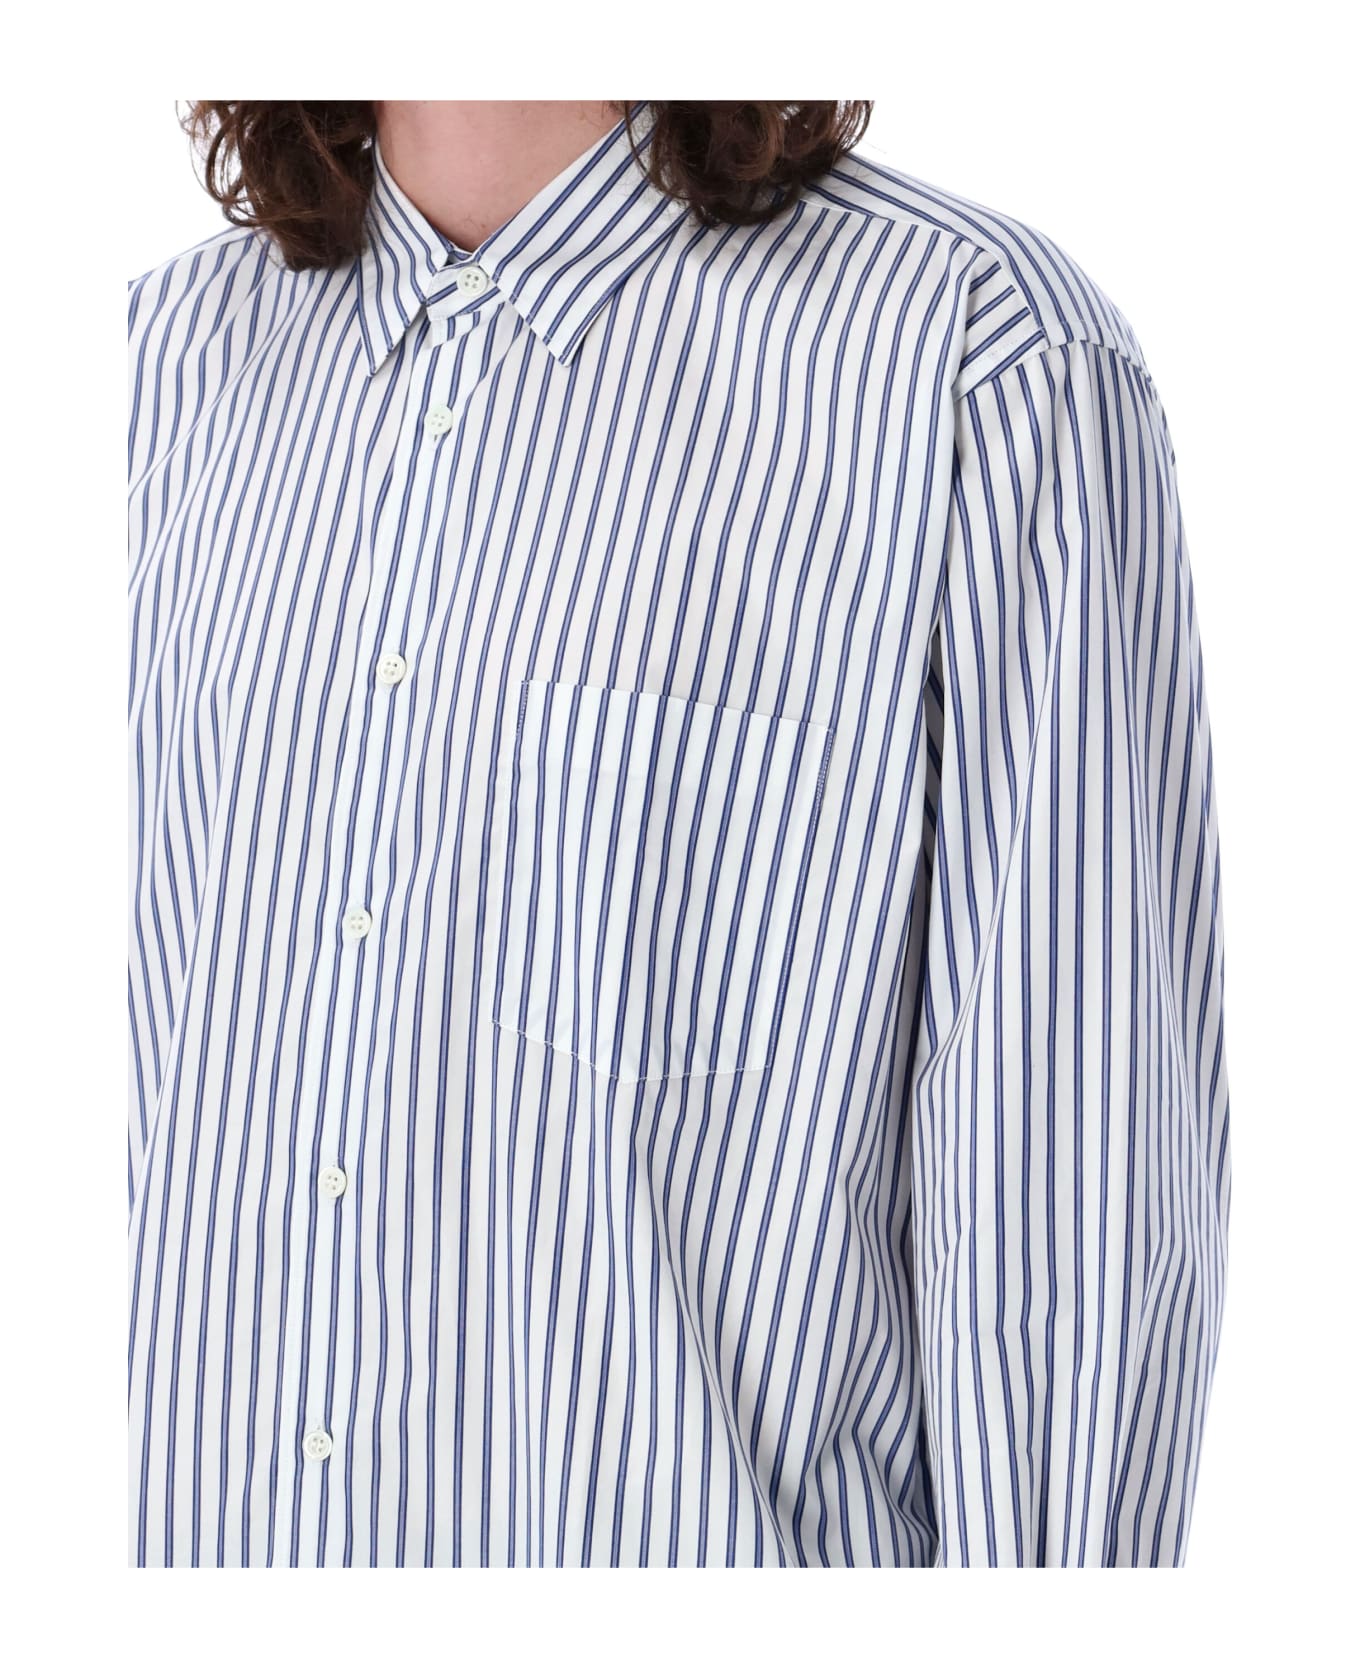 Comme des Garçons Shirt Striped Shirt - WHITE BLUE